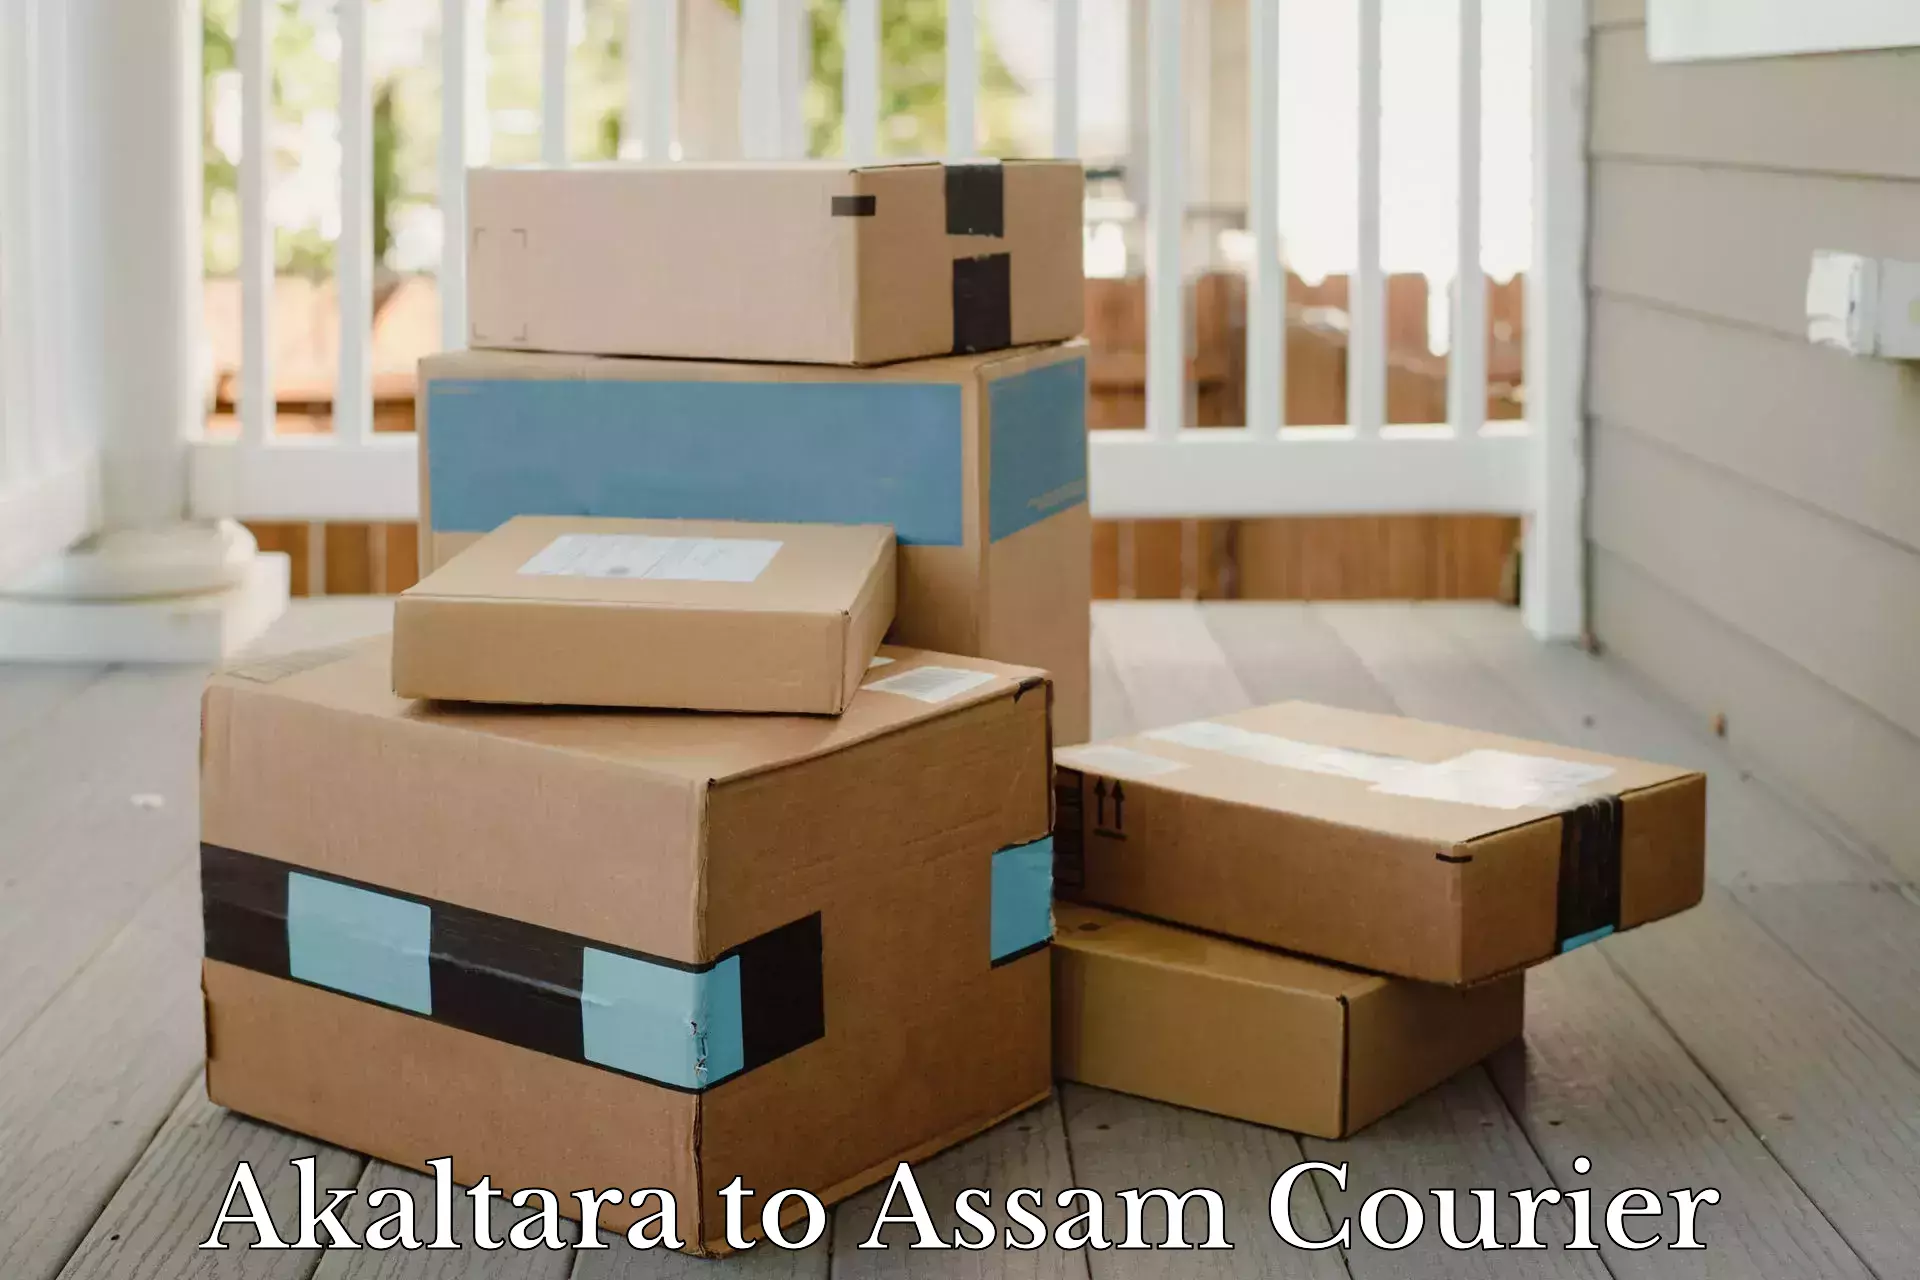 Courier service partnerships Akaltara to Assam